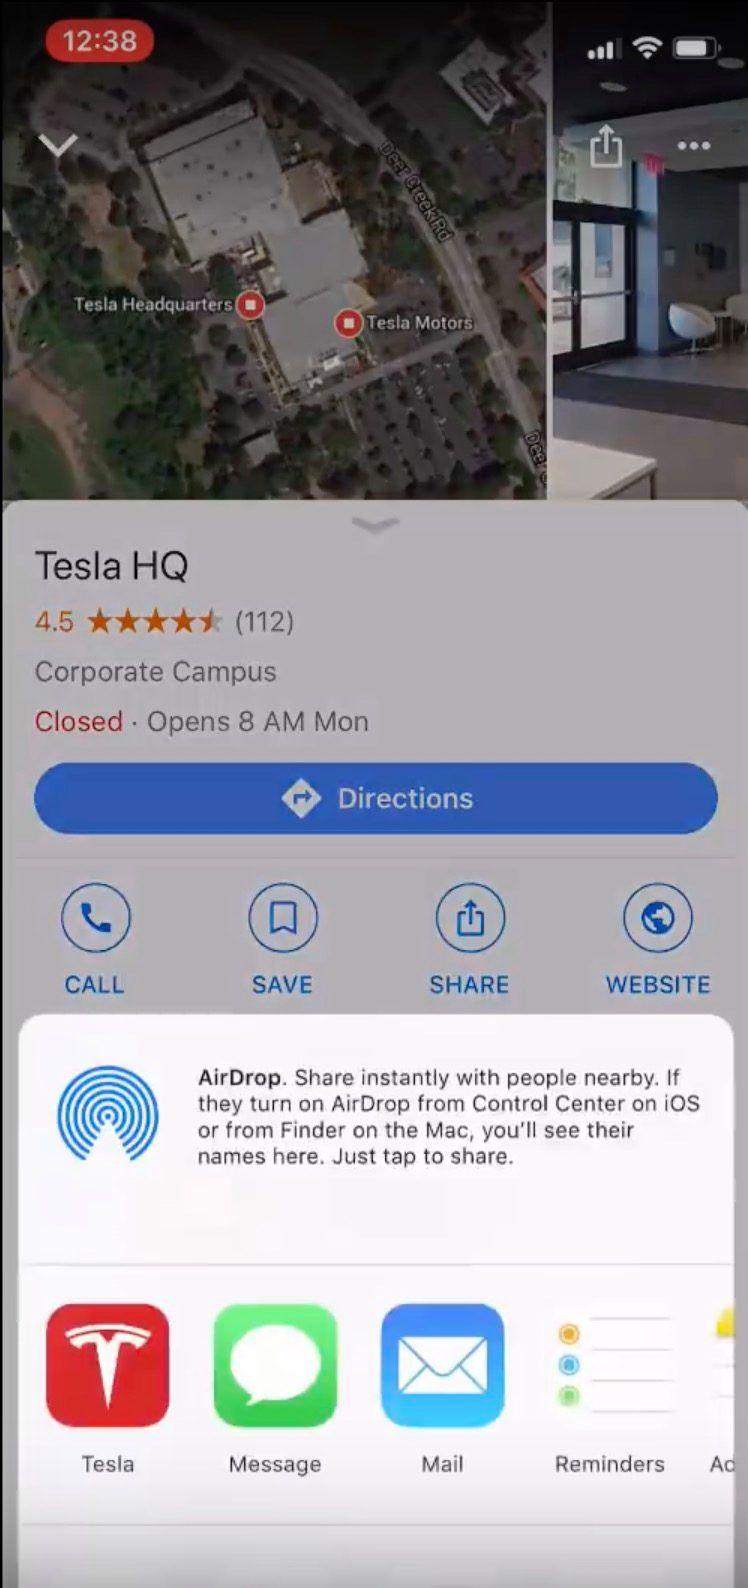 Tesla App Logo - Tesla's new mobile app update lets you get more control over your